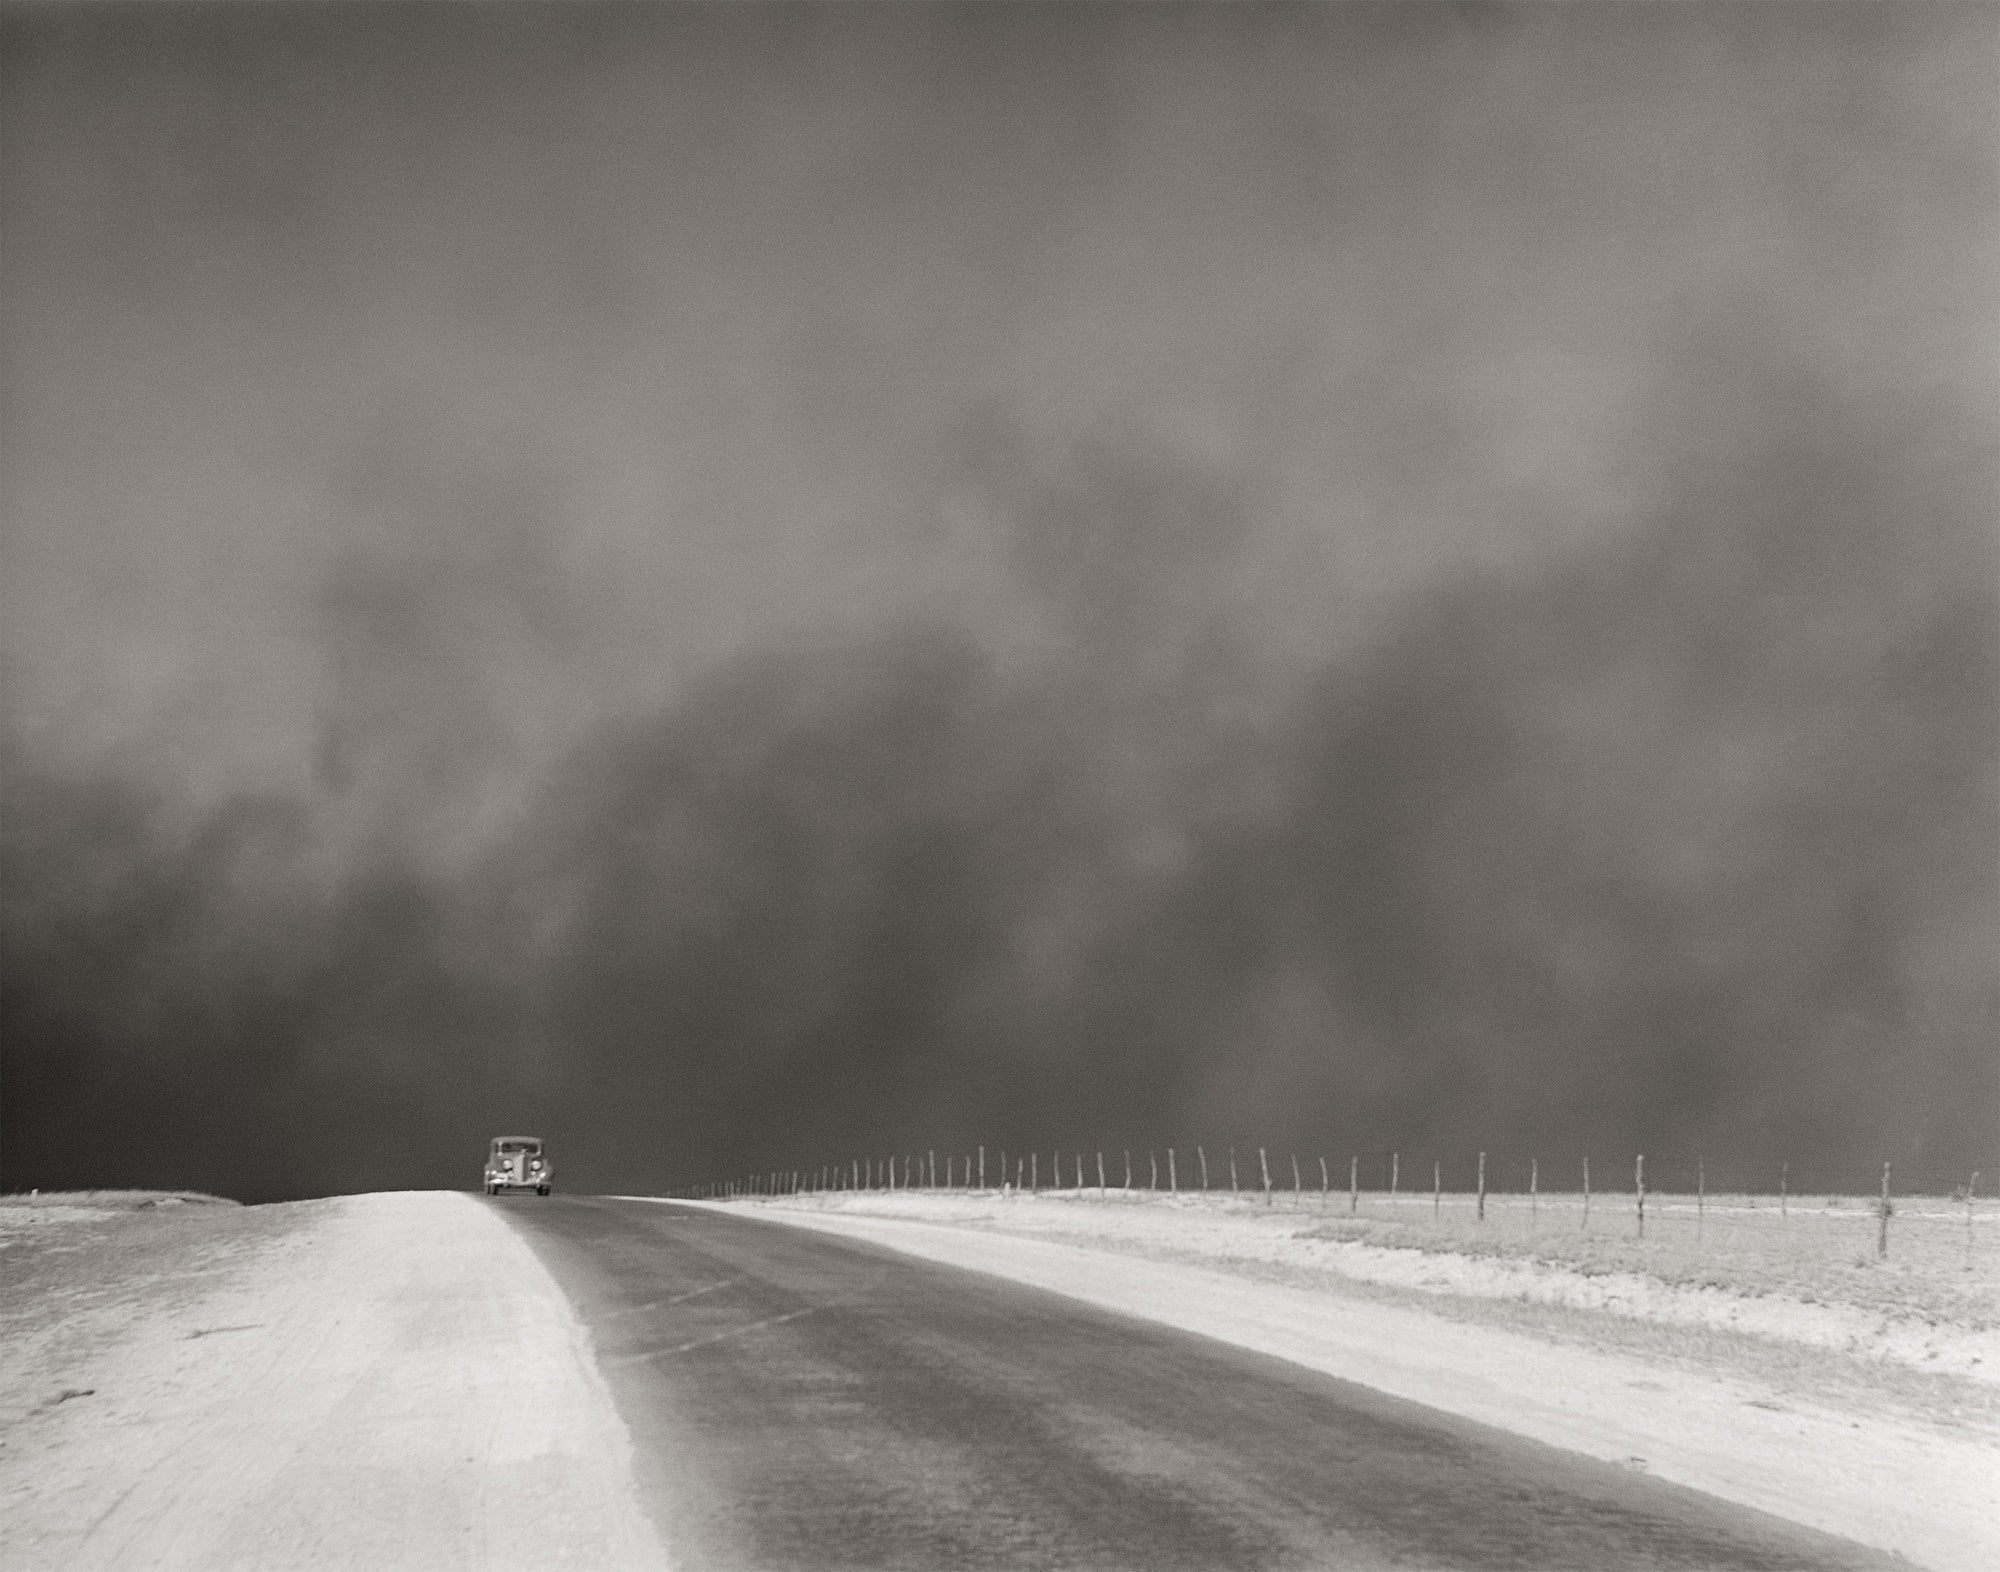 Texas Panhandle, 1936, Storm, Arthur Rothstein Historical Pix